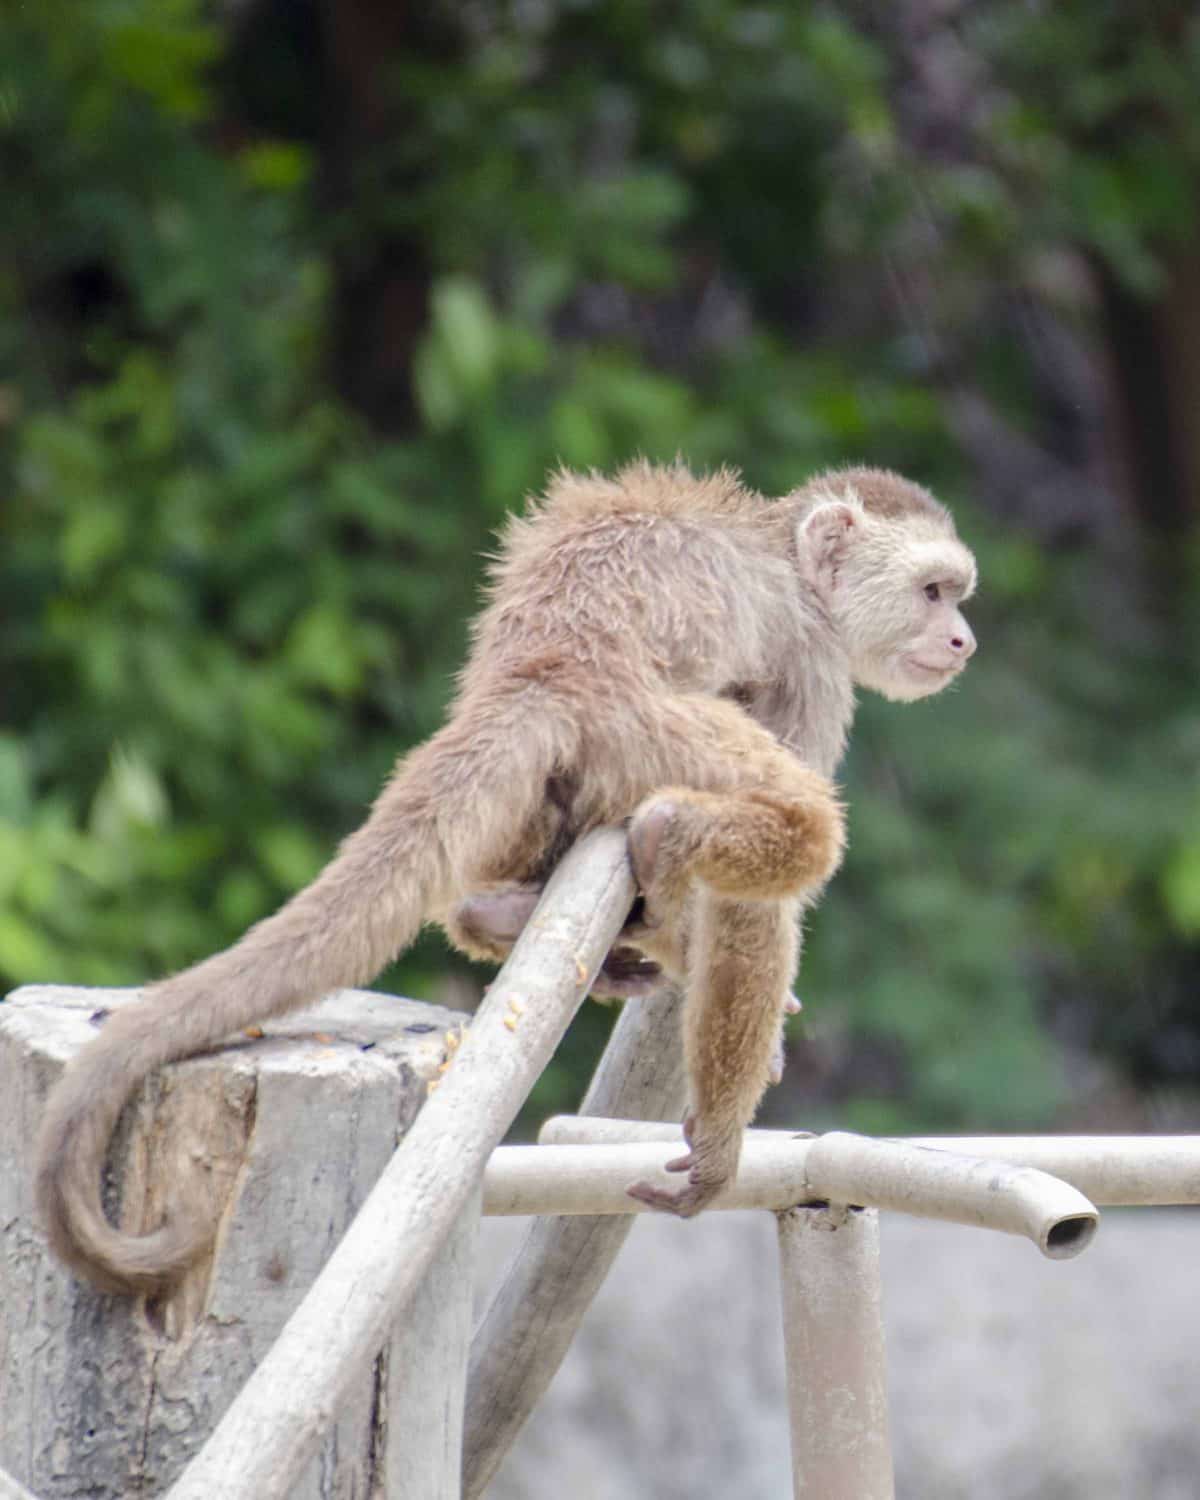 Monkey at the Parque Histórico, Guayaquil, Ecuador.